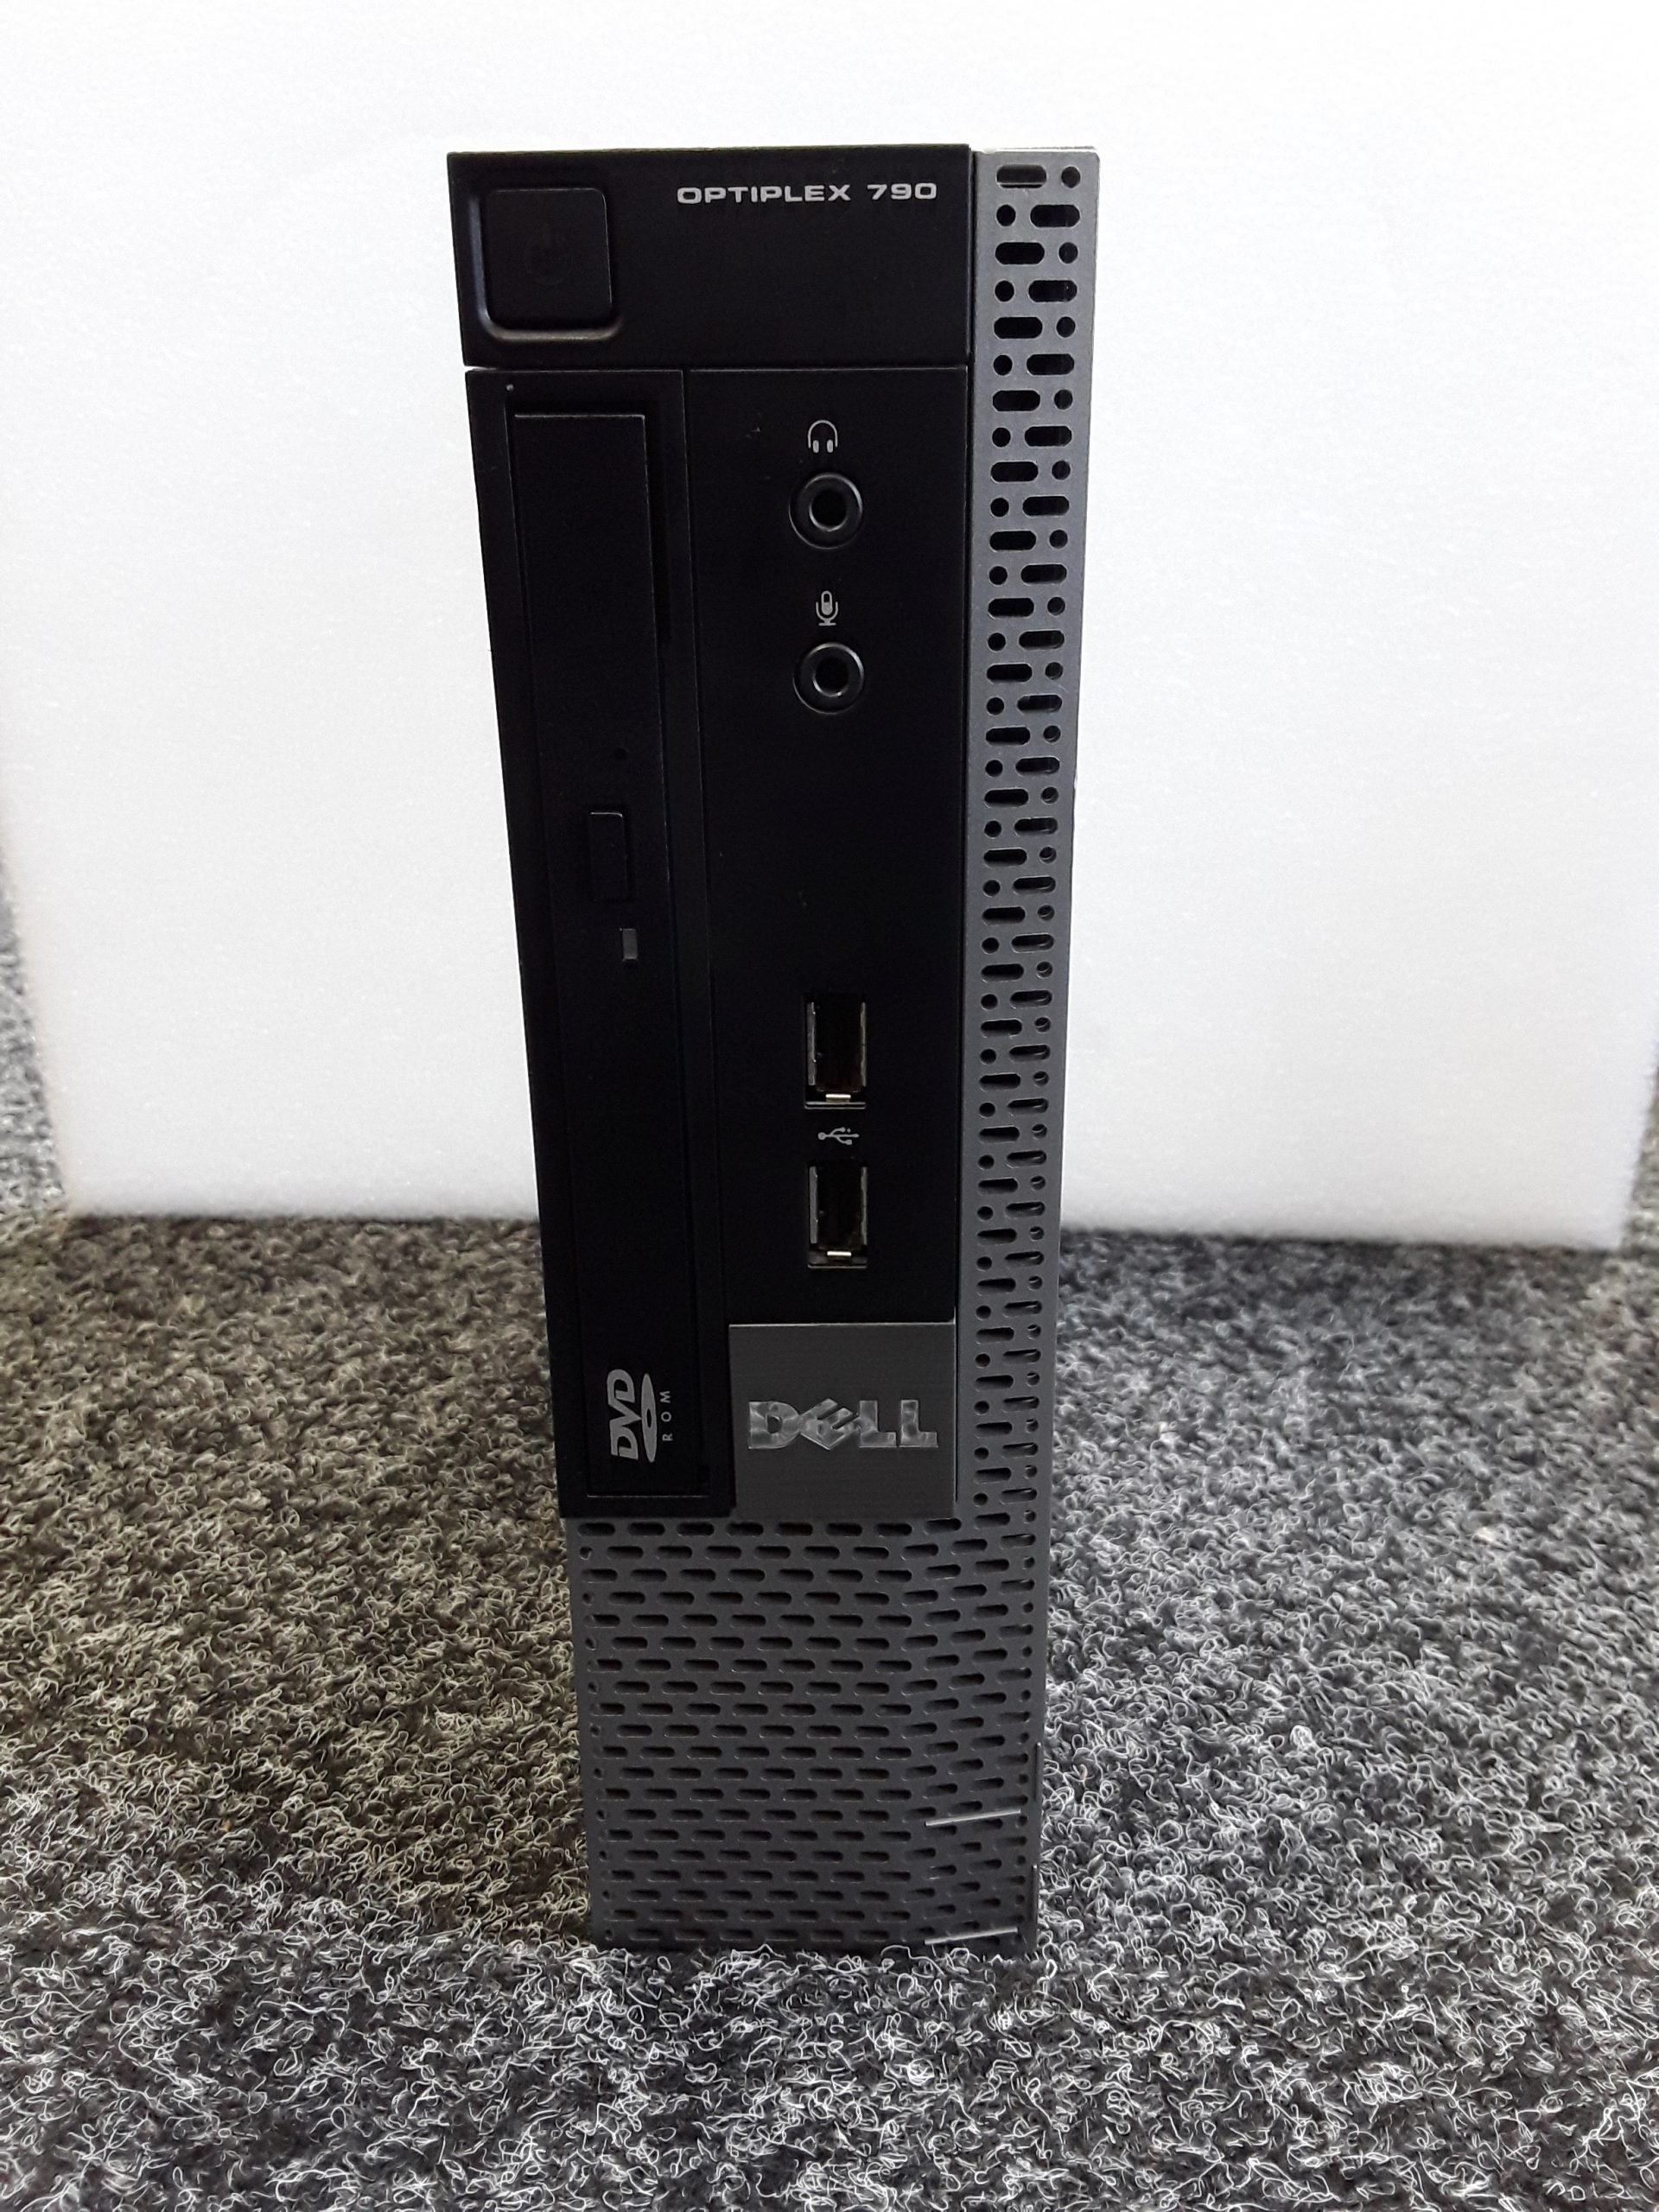 Refurbished Dell PC